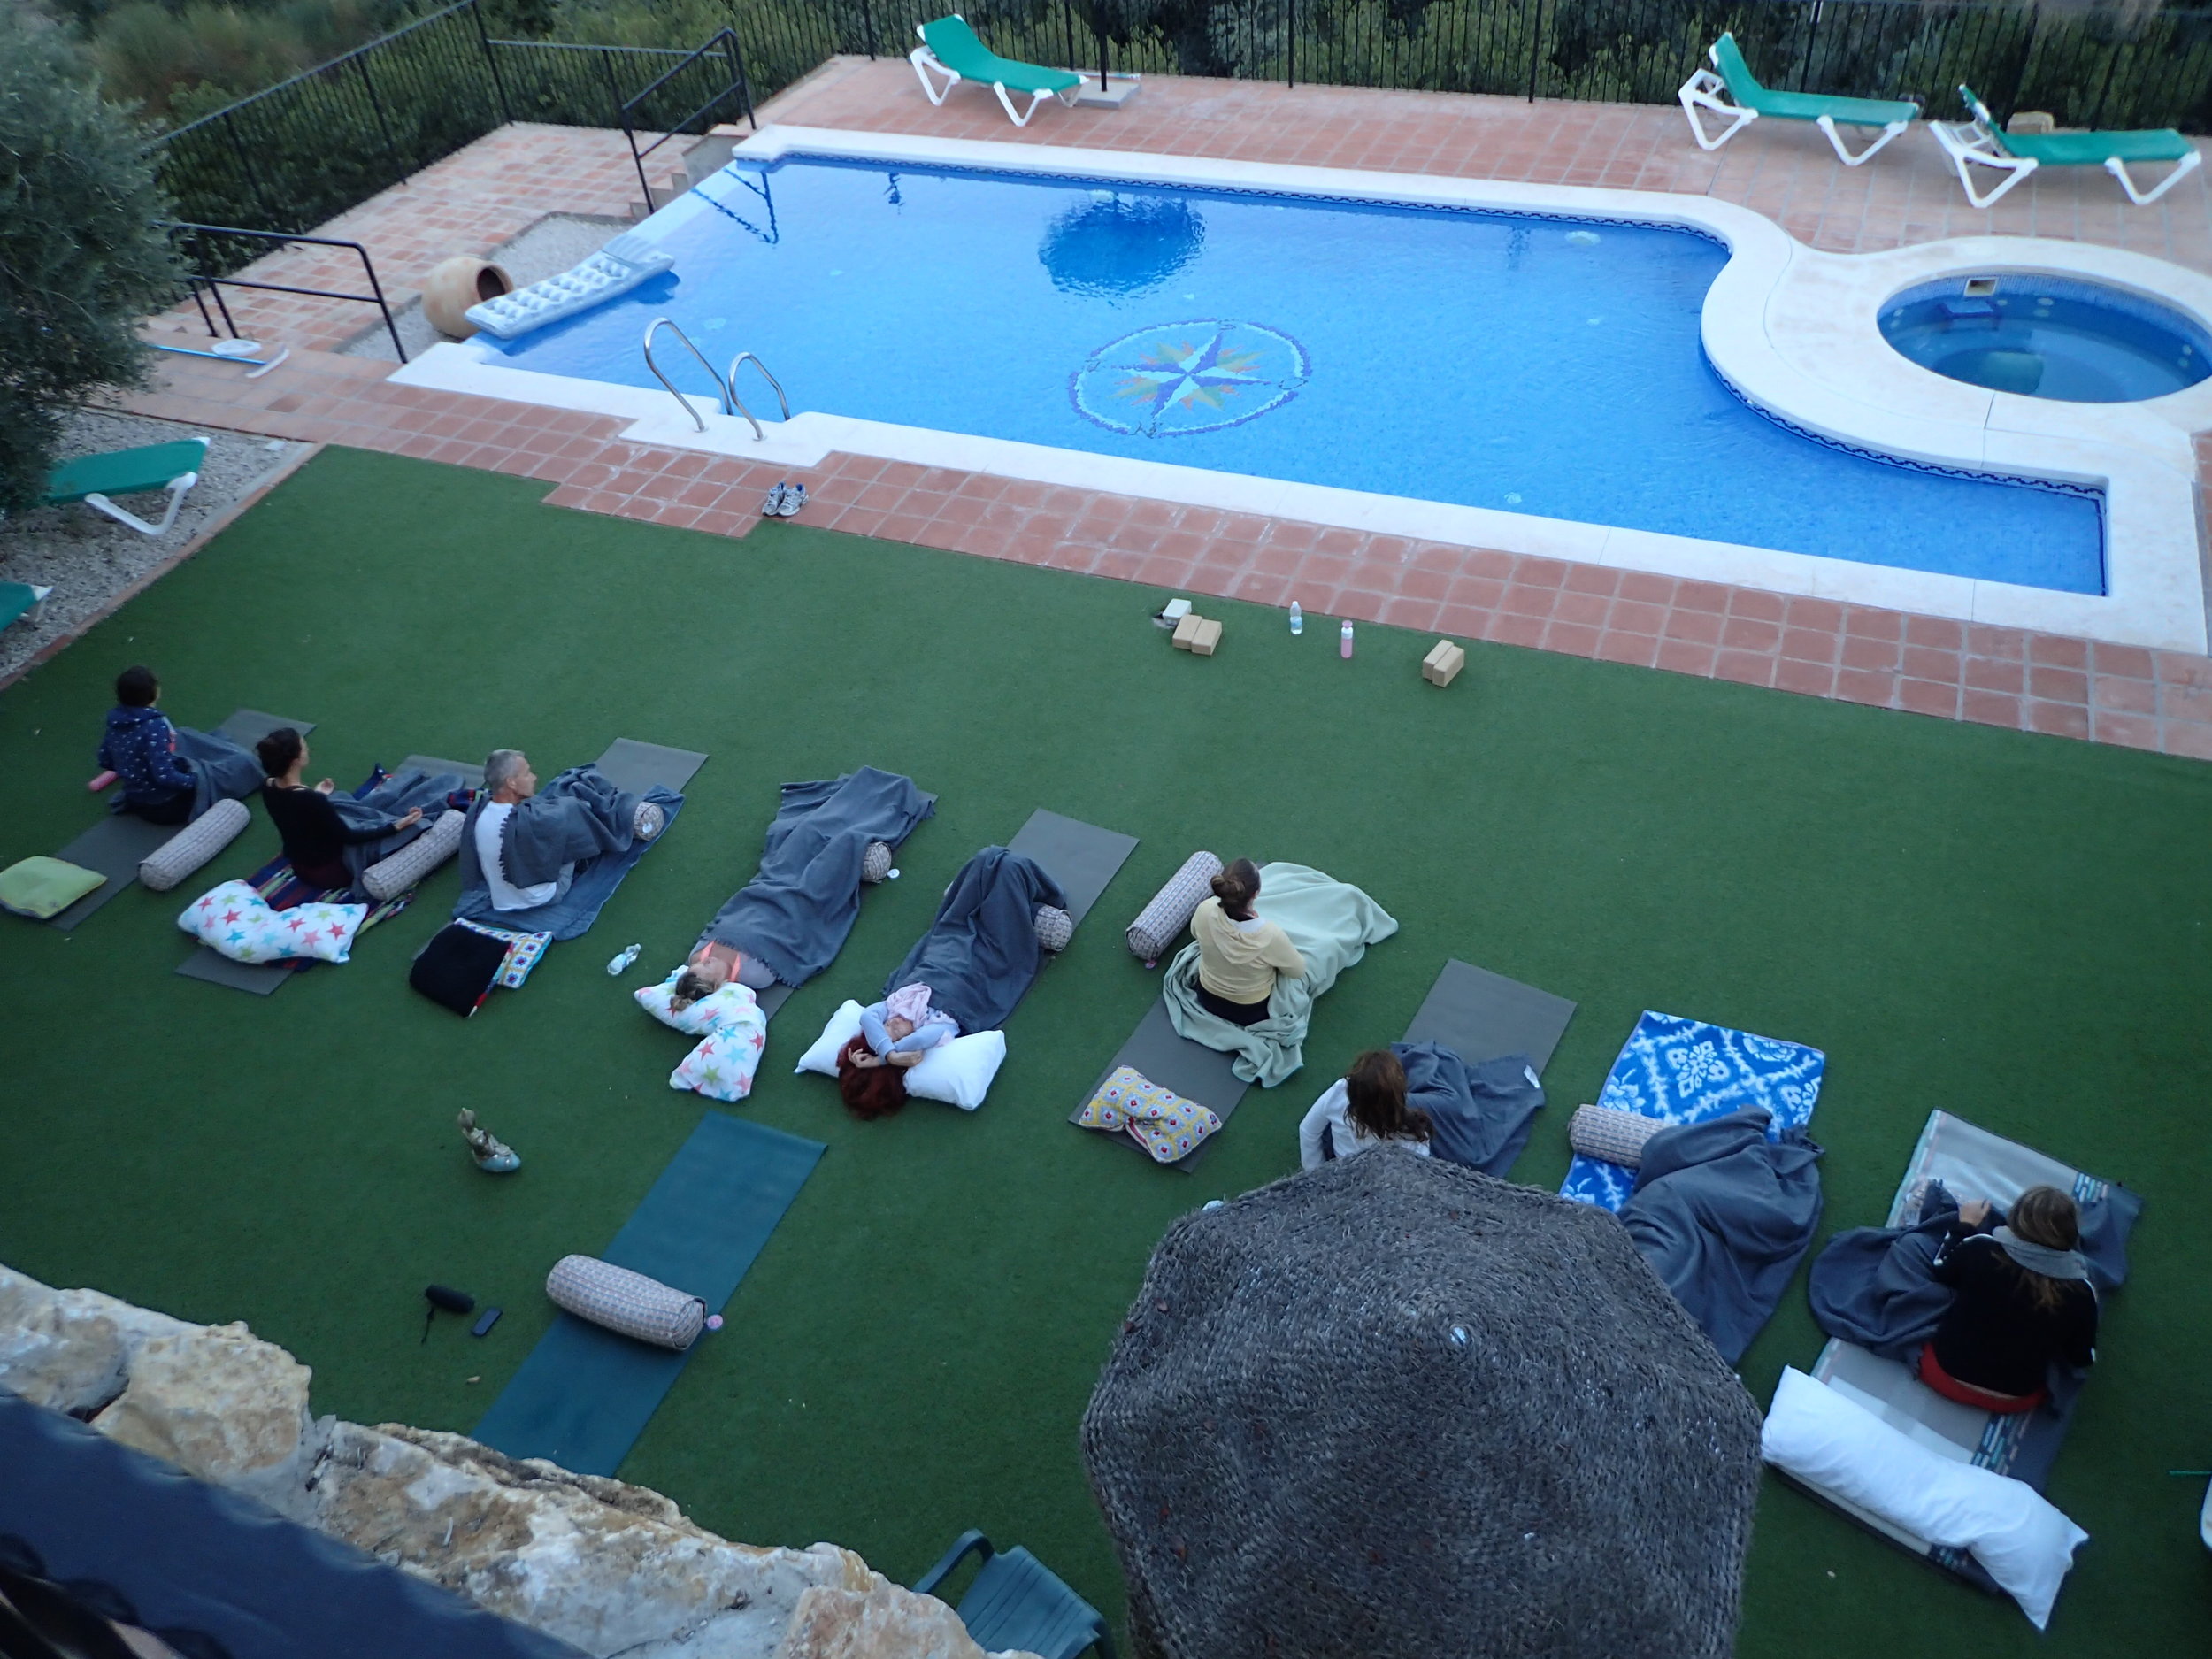 Yoga Nidra at pool at Yin Yang Yoga retreat in the Malaga mountains in Spain with Jane Bakx Yoga (Copy) (Copy)